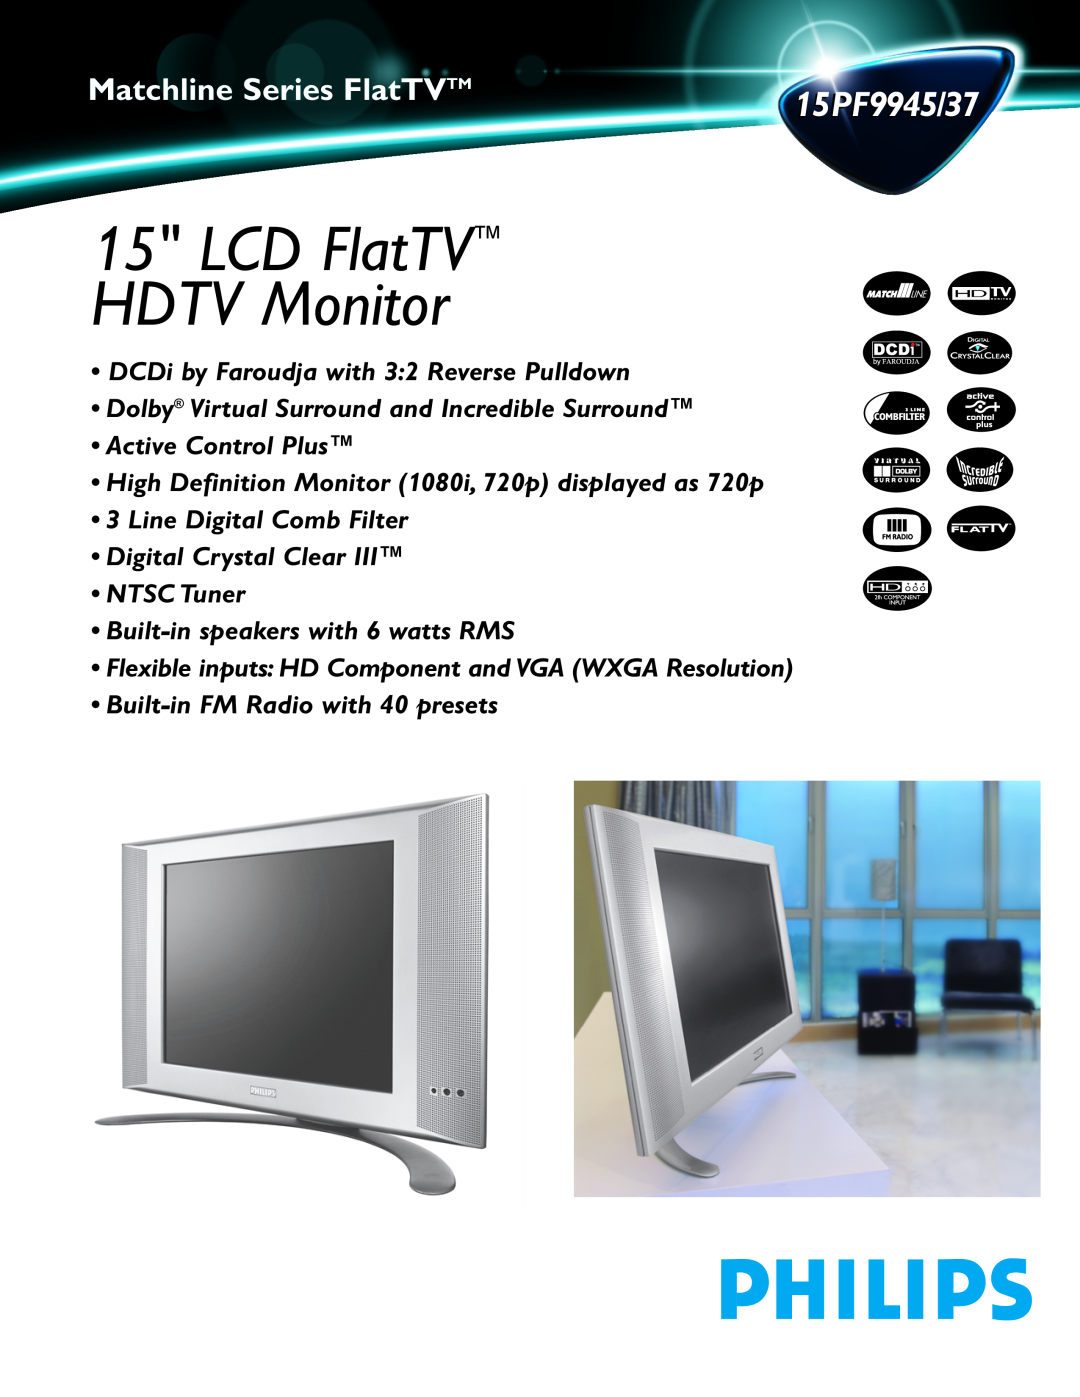 Philips manual LCD FlatTV HDTV Monitor, Matchline Series FlatTVTM15PF9945/37, DCDi by Faroudja with 32 Reverse Pulldown 